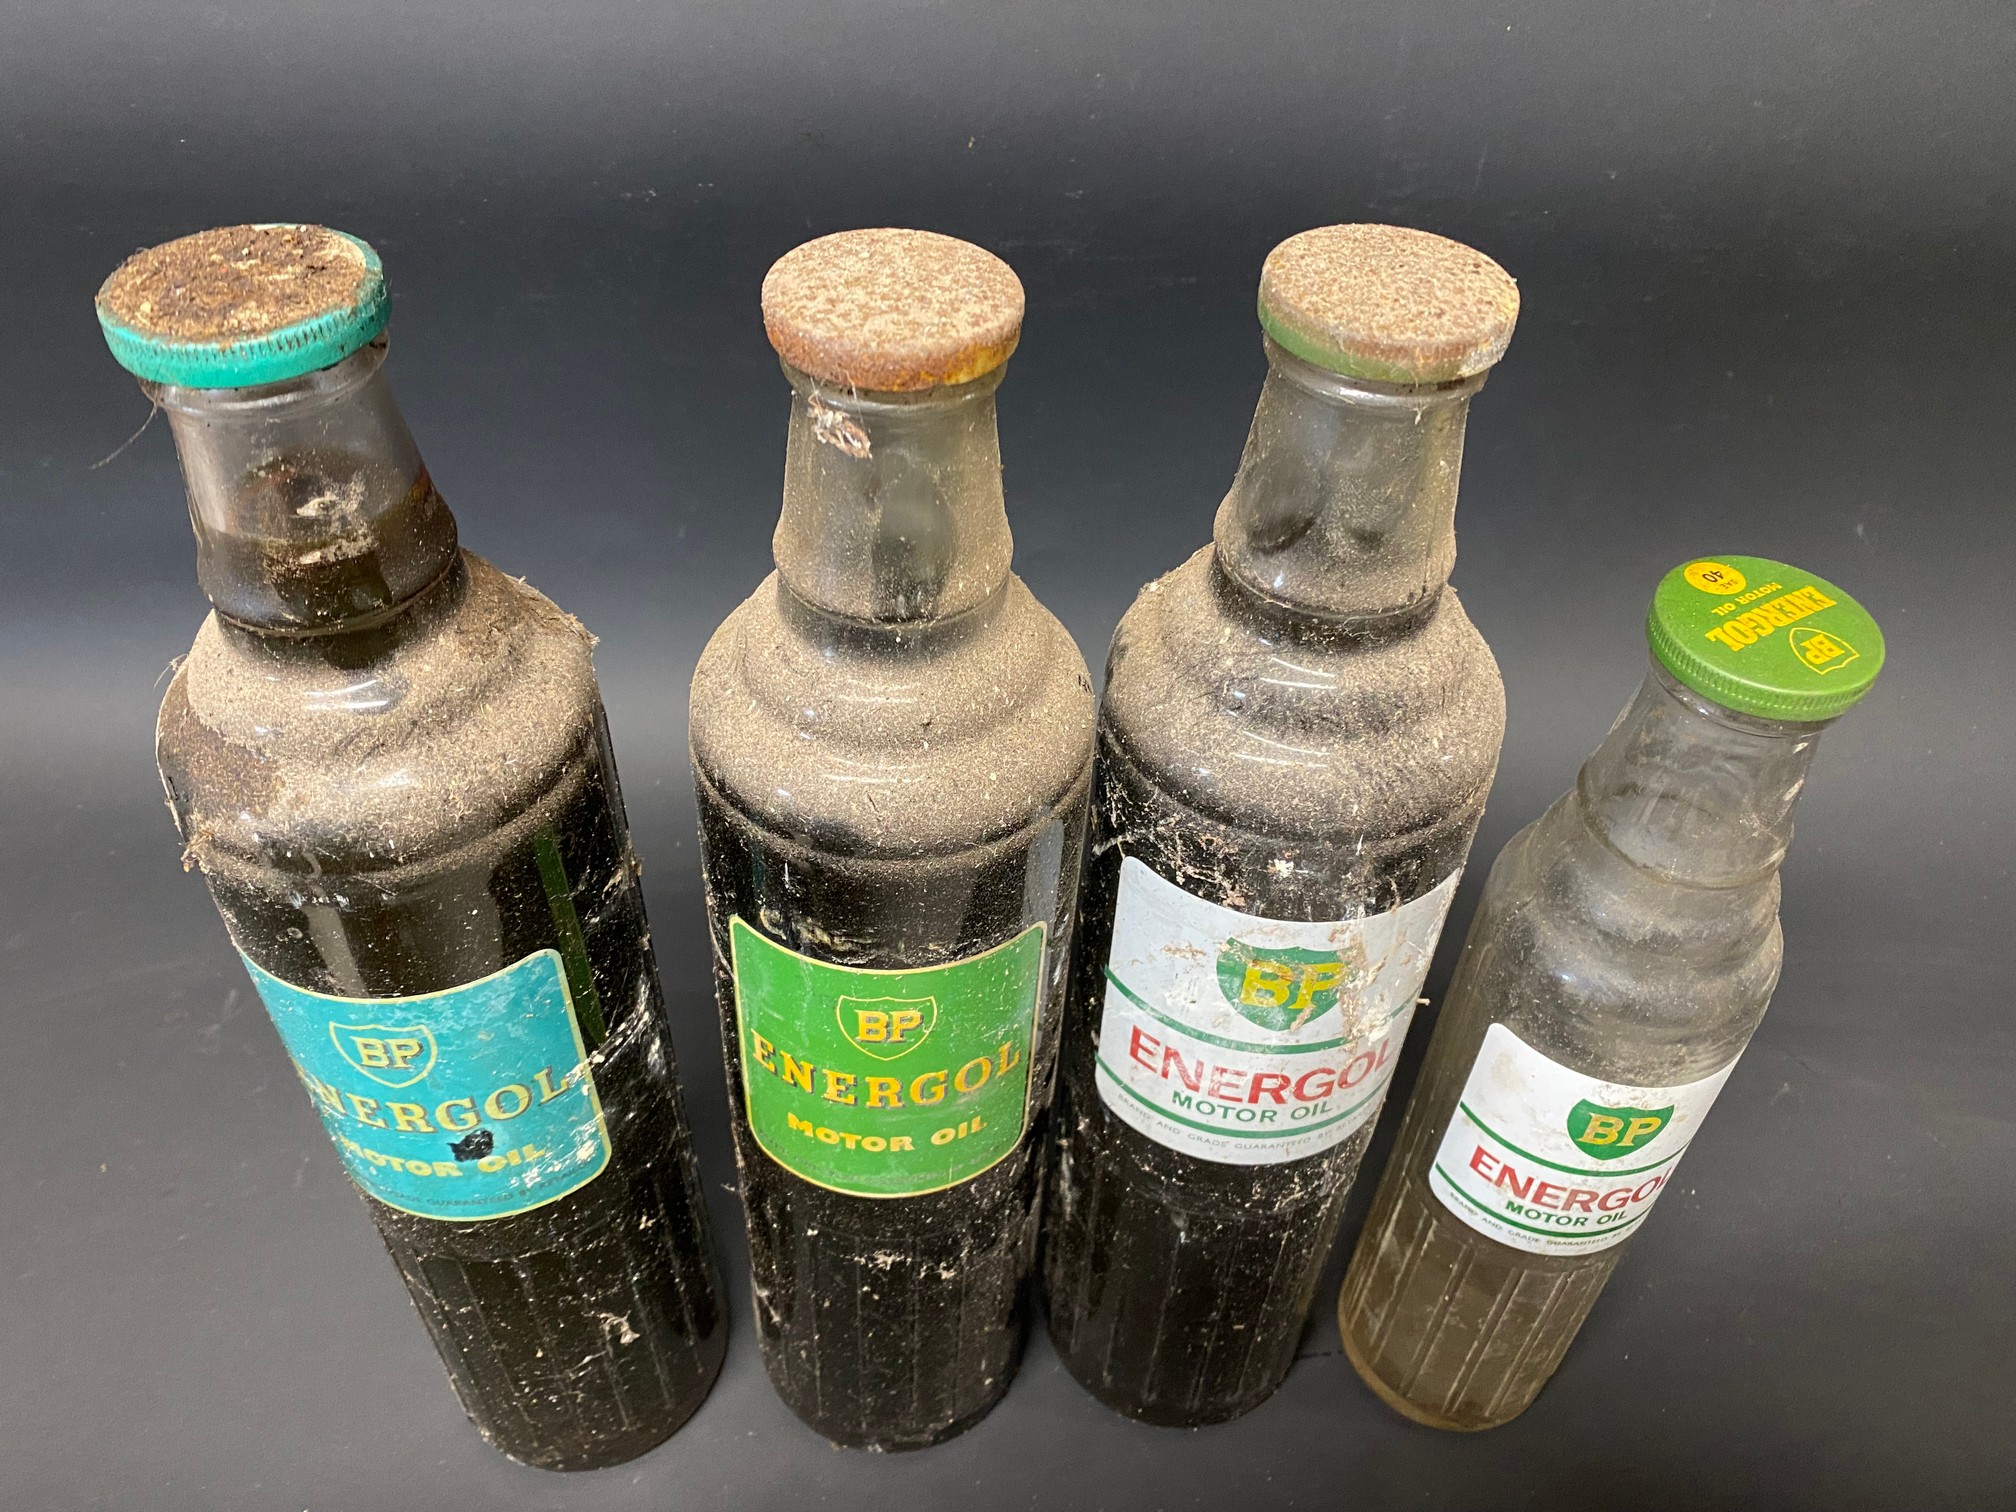 Three BP Energol quart oil bottles and a pint version.